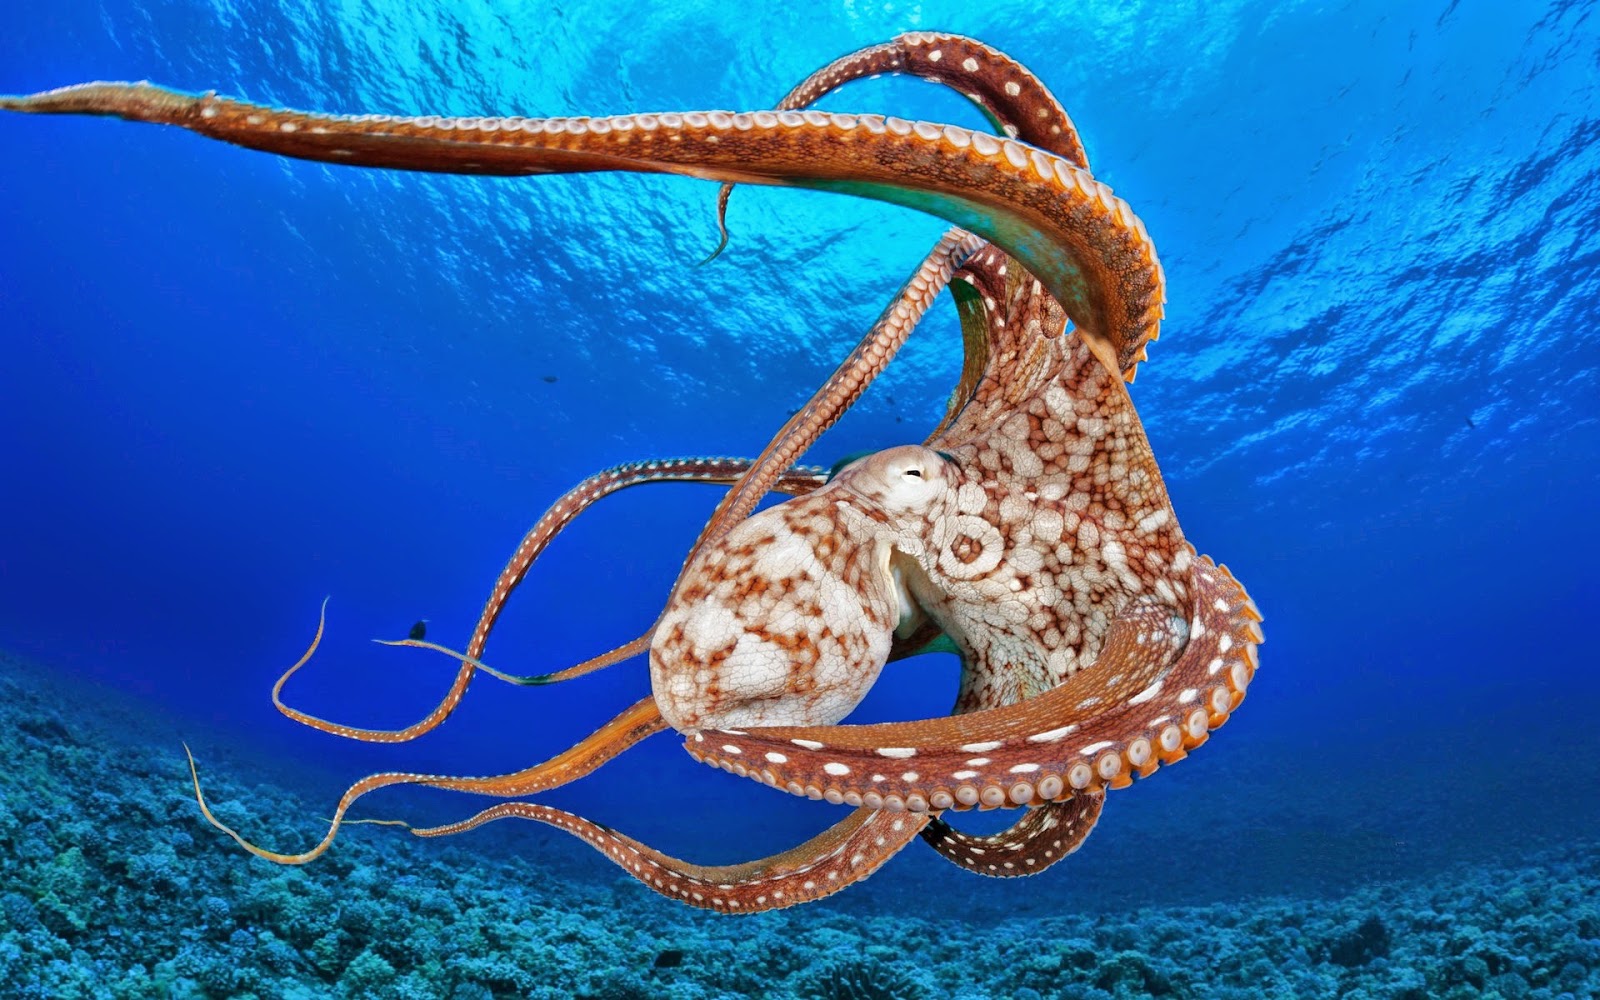 octopus wallpaper,organism,giant pacific octopus,invertebrate,marine invertebrates,marine biology